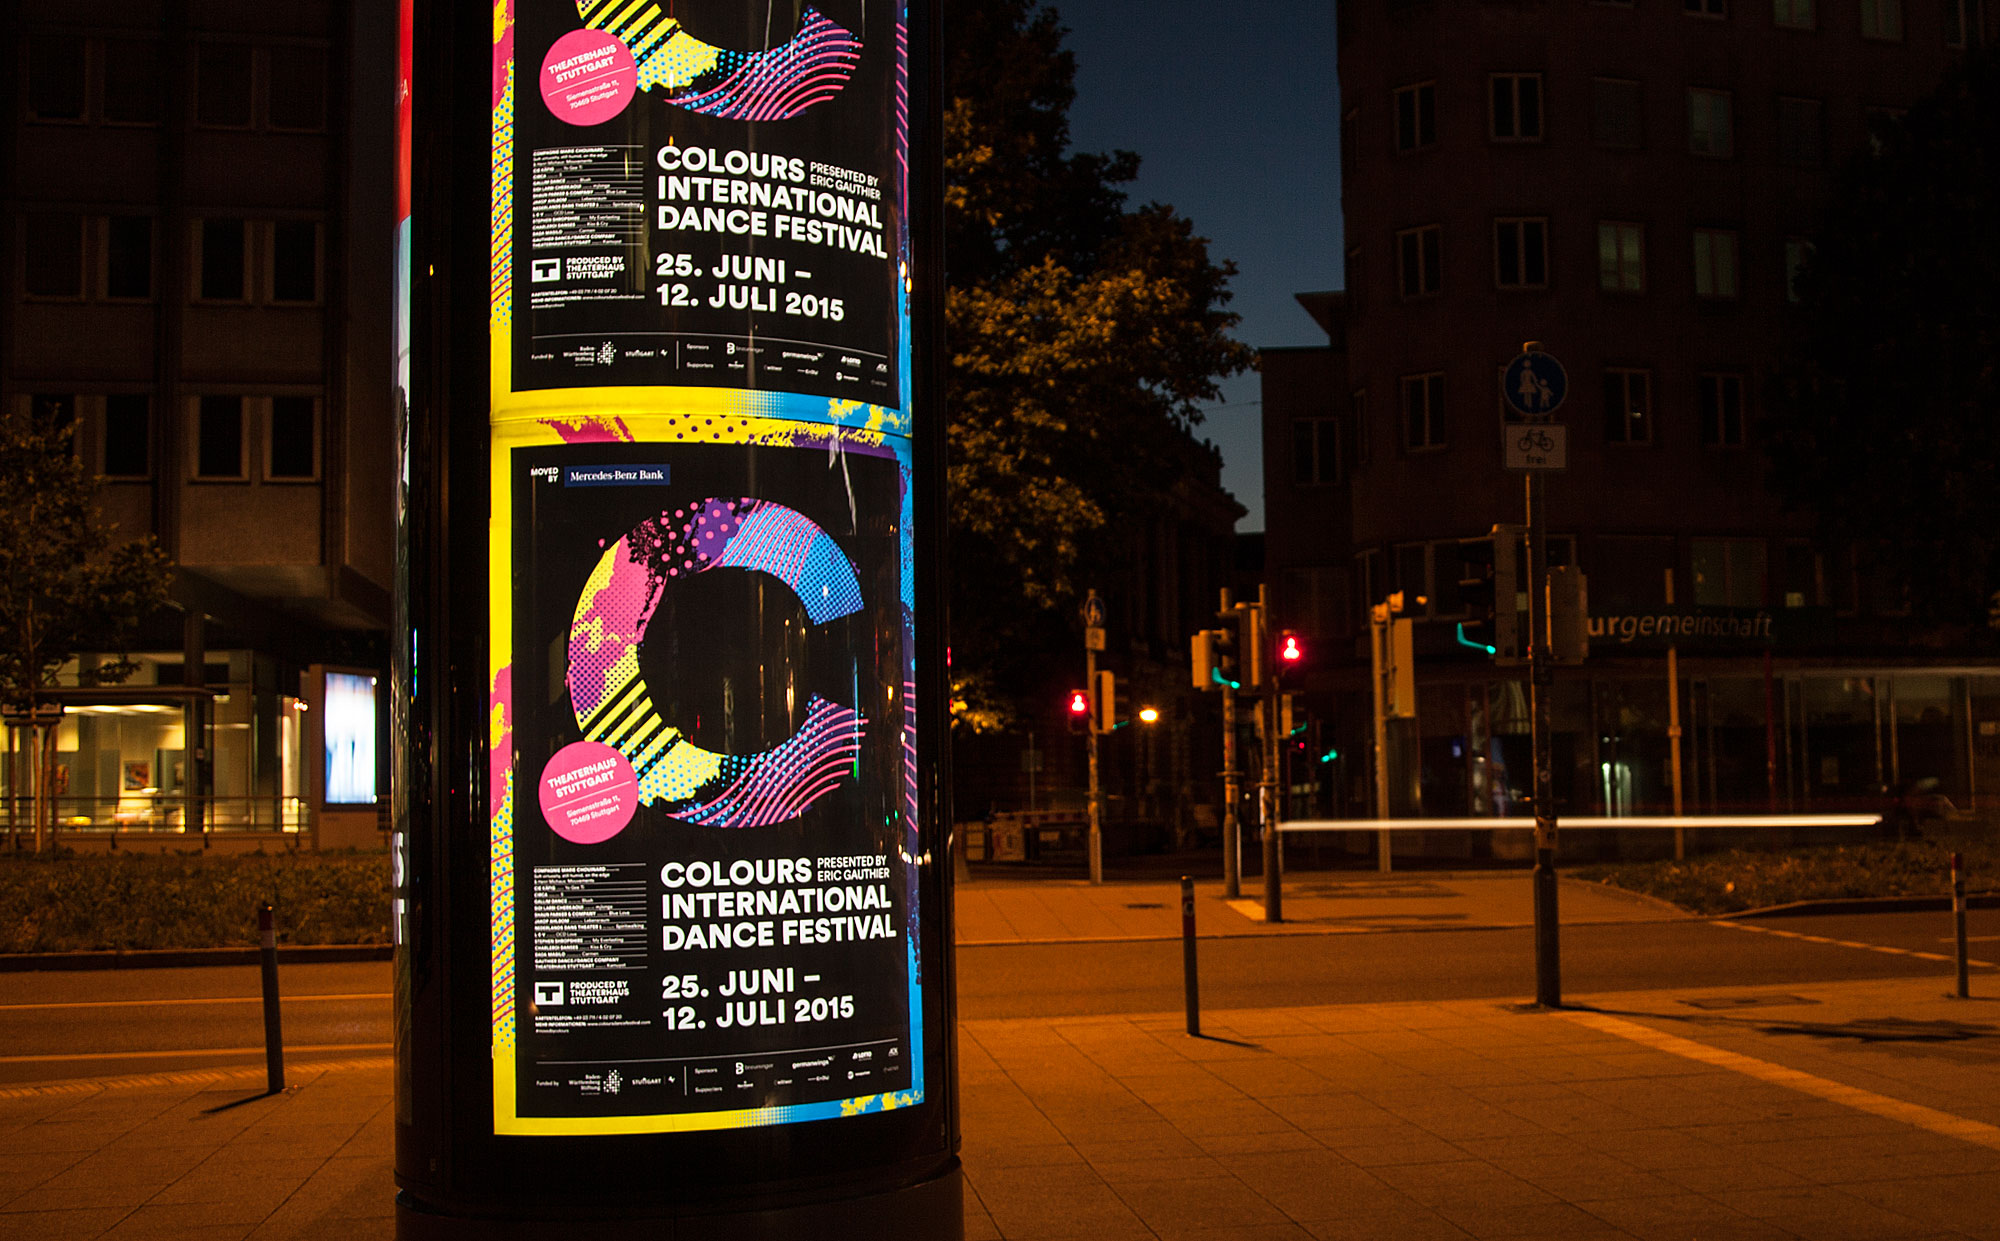 75a aus Stuttgart entwickelt das Corporate Design des Colours International Dance Festival 2015 presented by Eric Gauthier